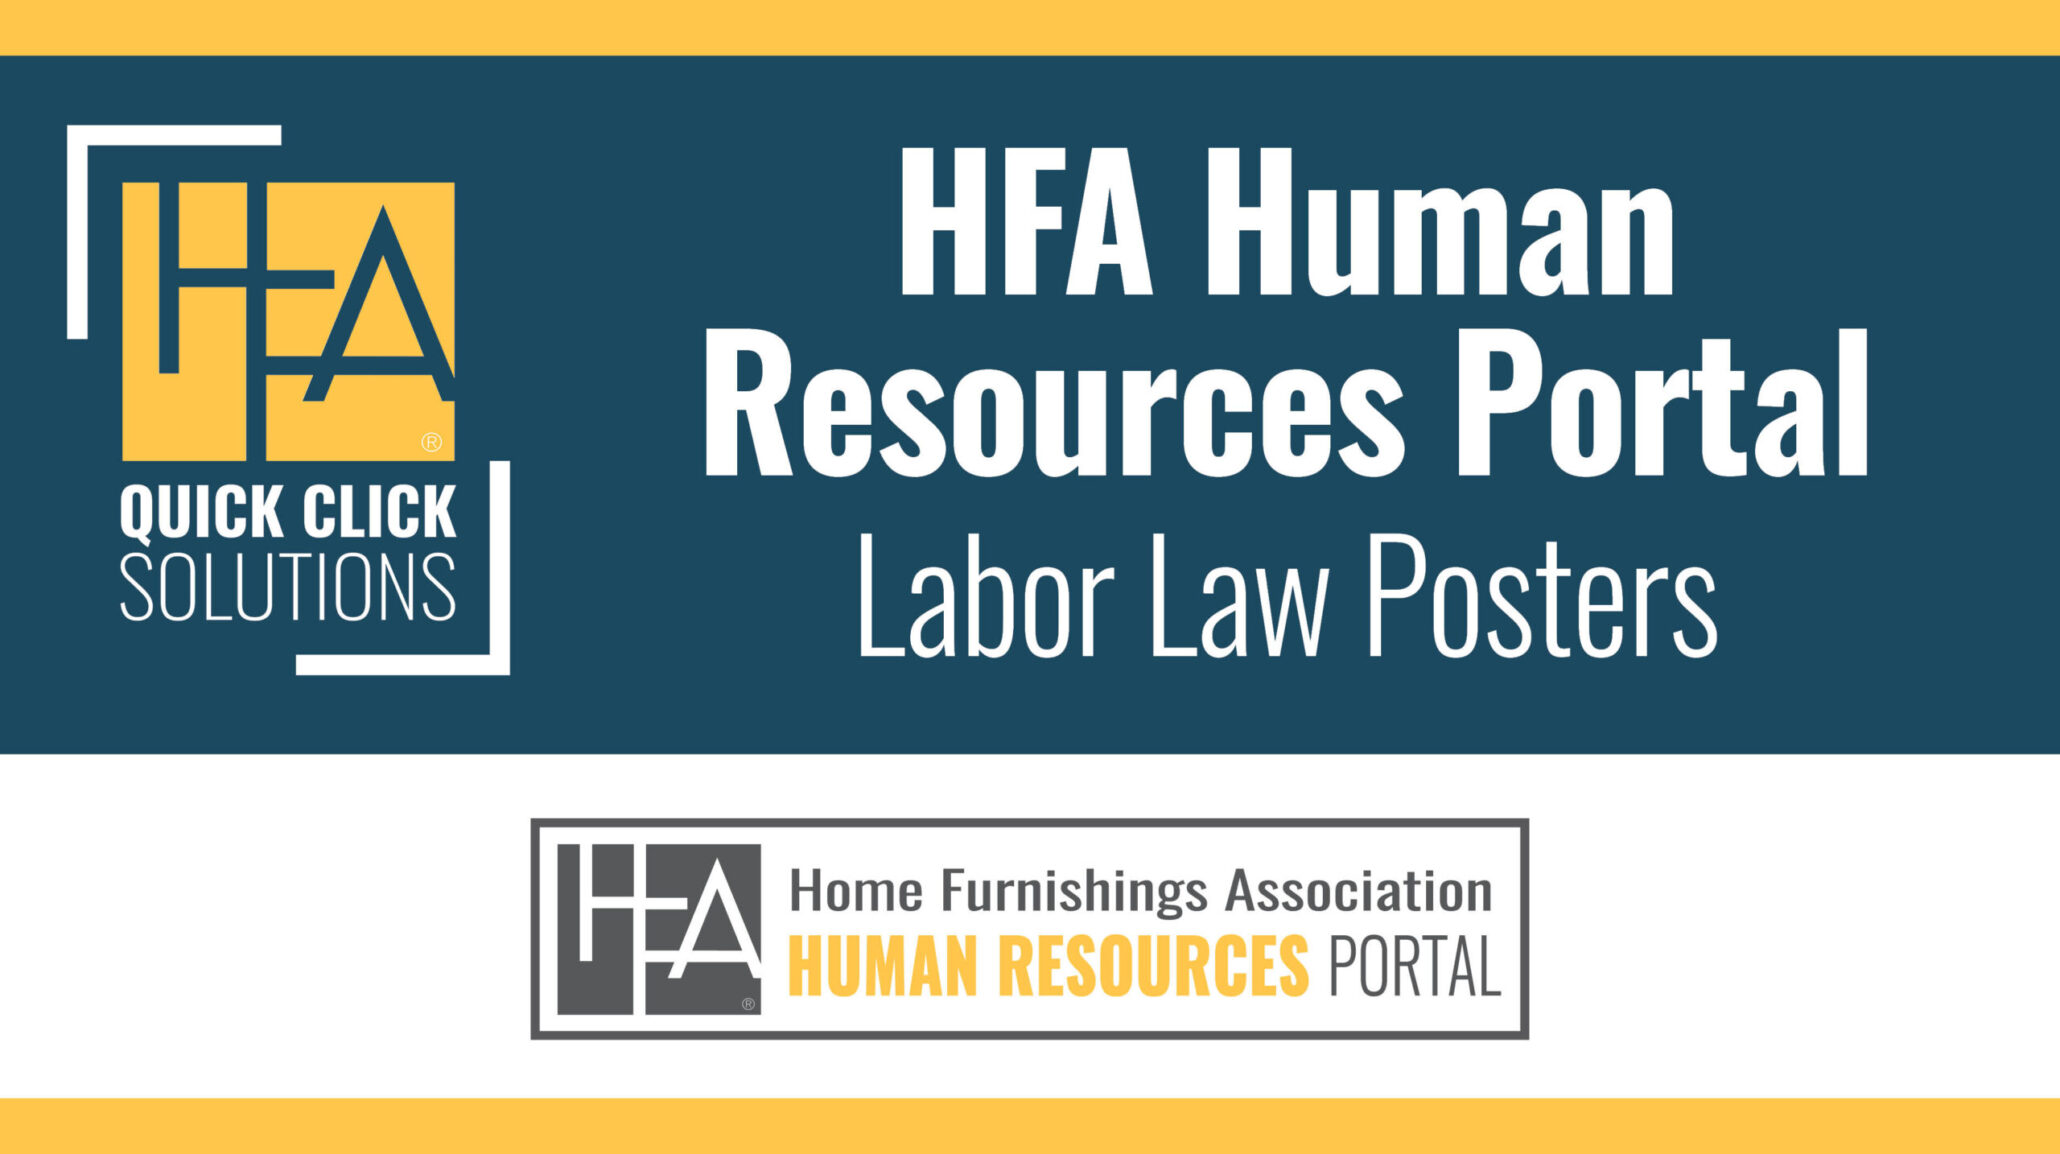 HFA_HR Portal Labor Laws Posters